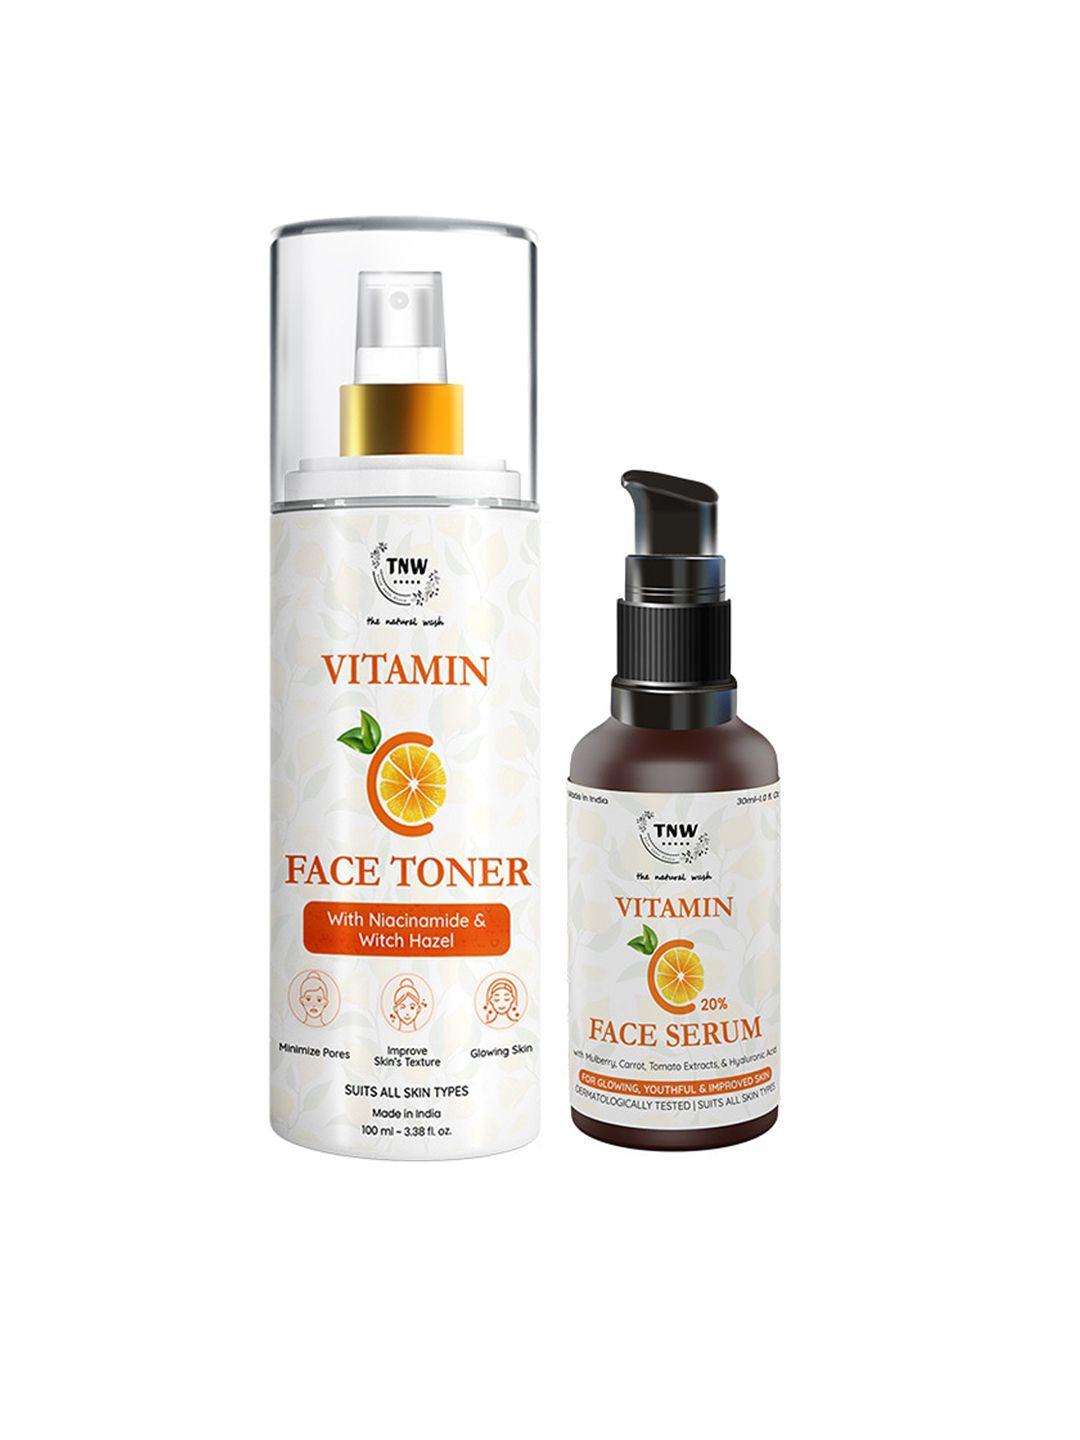 tnw the natural wash vitamin c face toner & vitamin c face serum